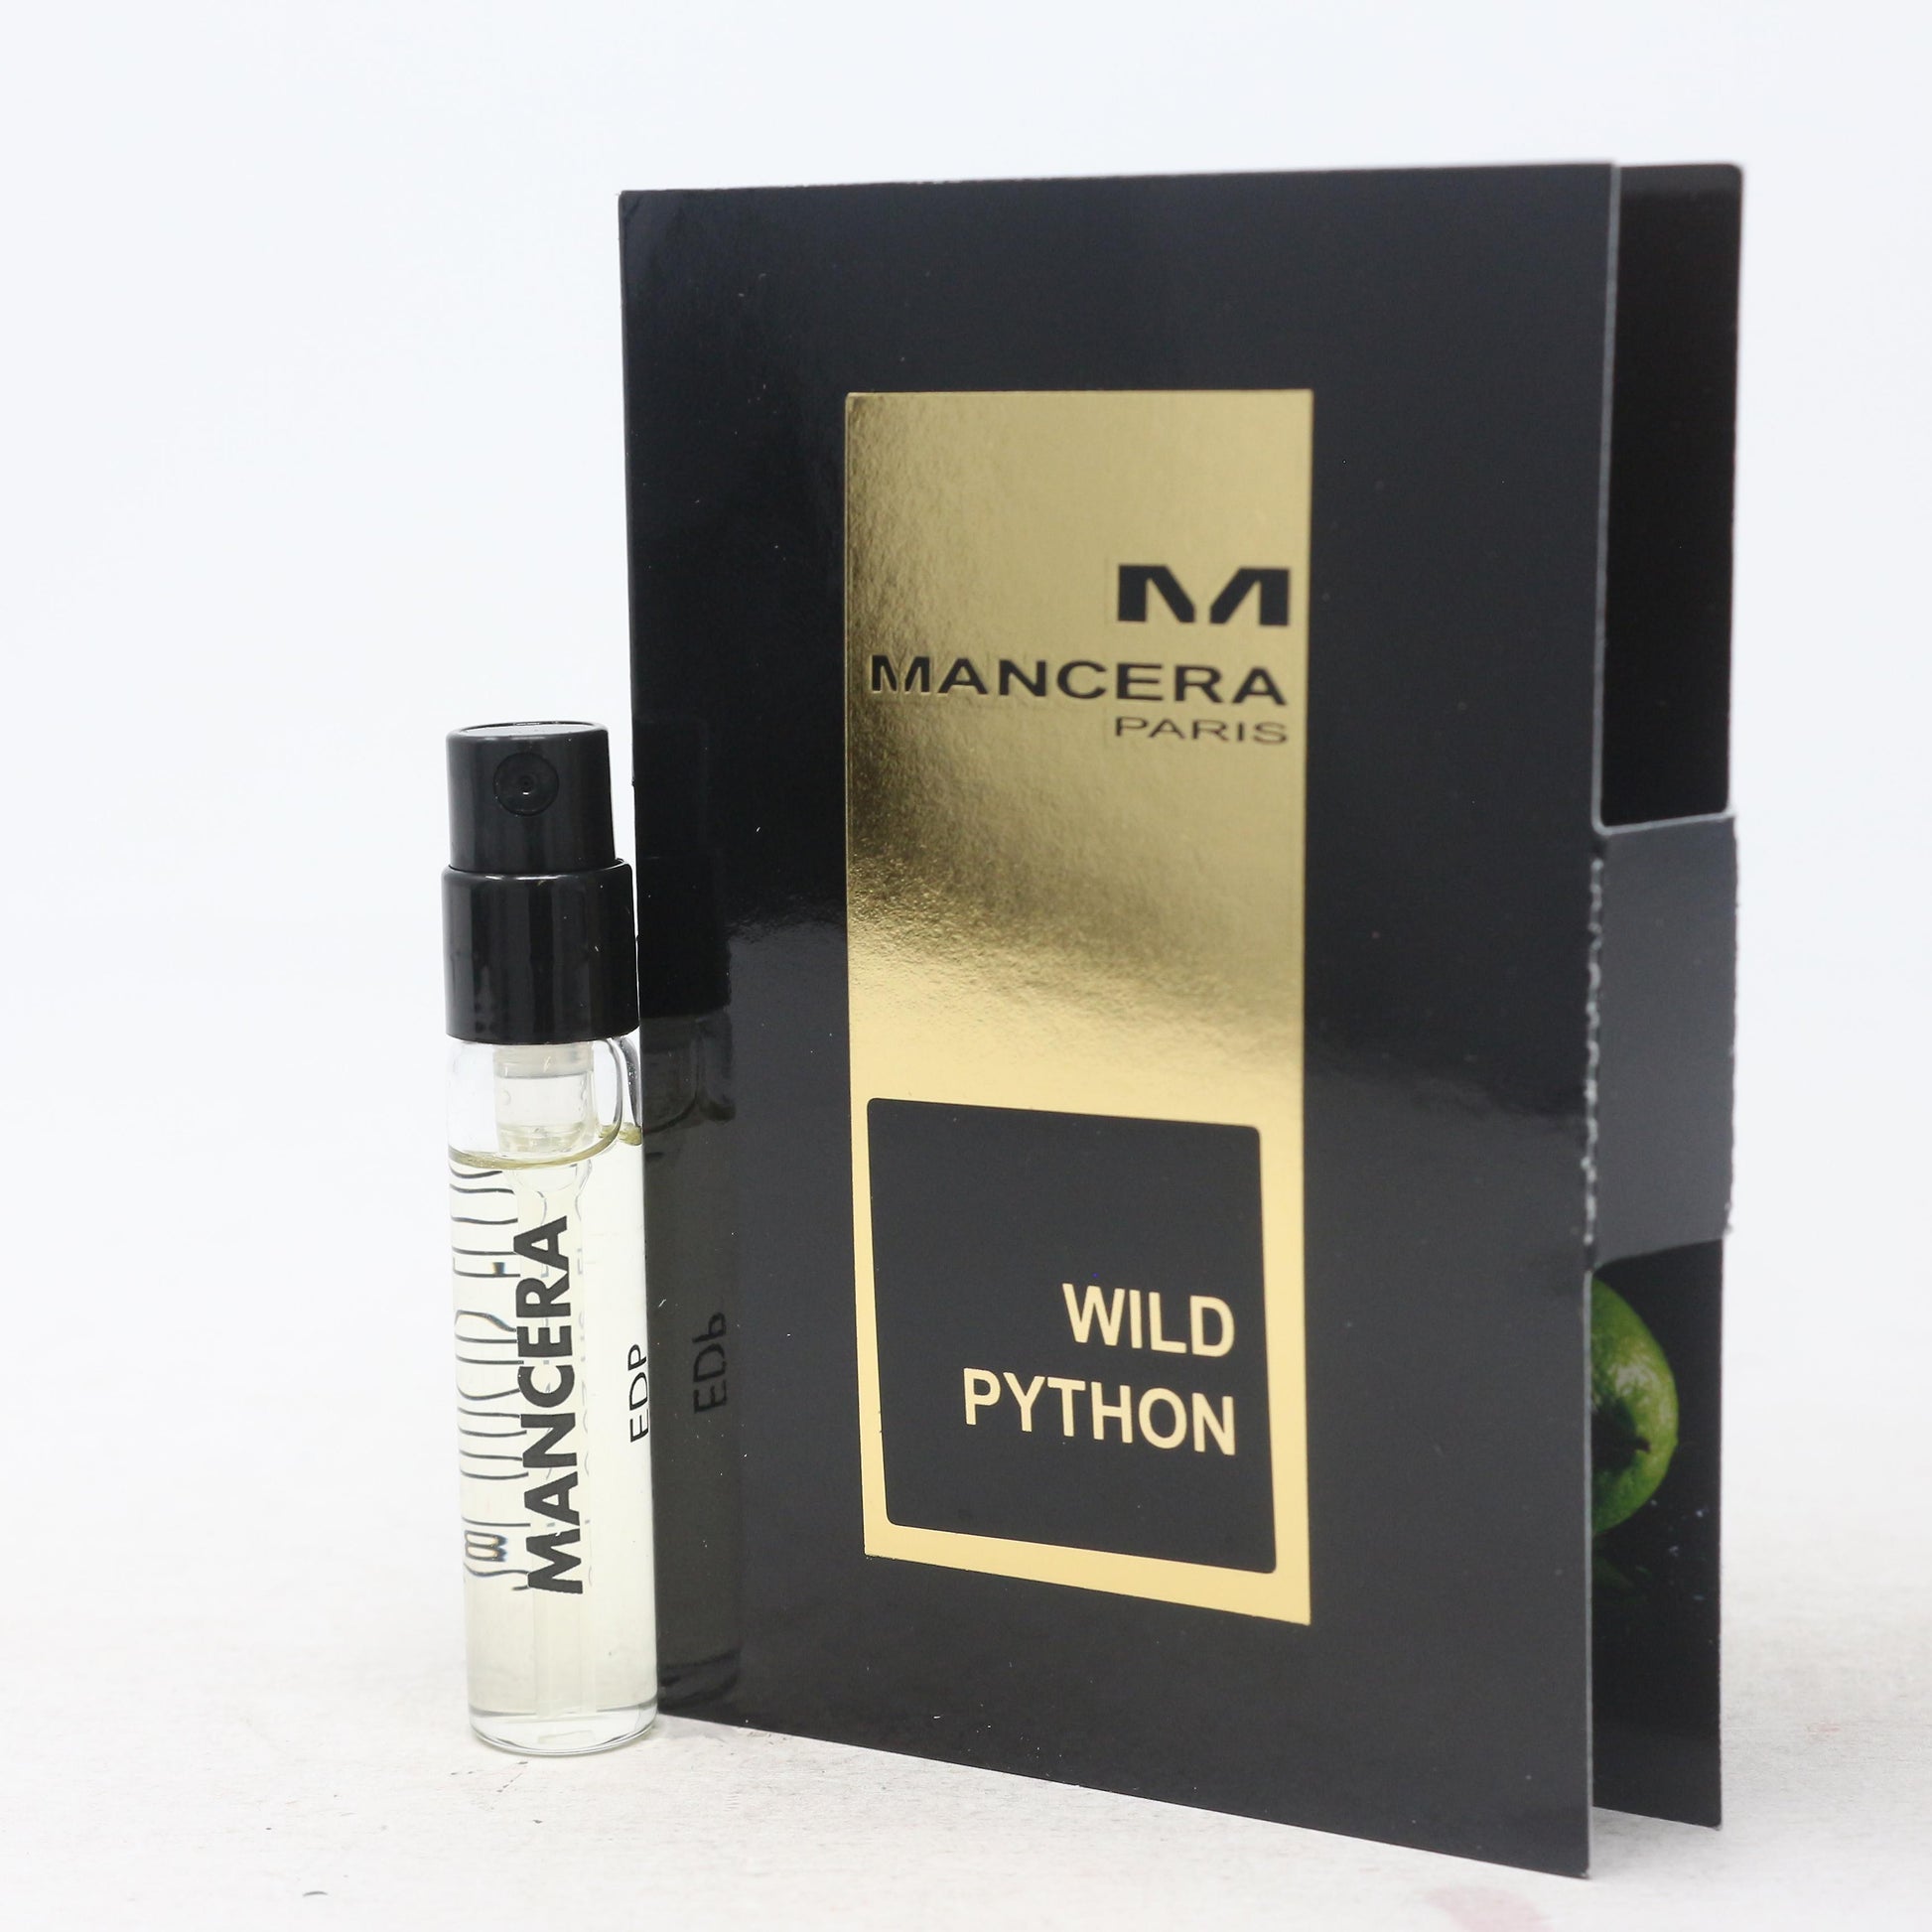 Mancera Wild Python offisiell prøve 2ml 0.07 fl.oz.